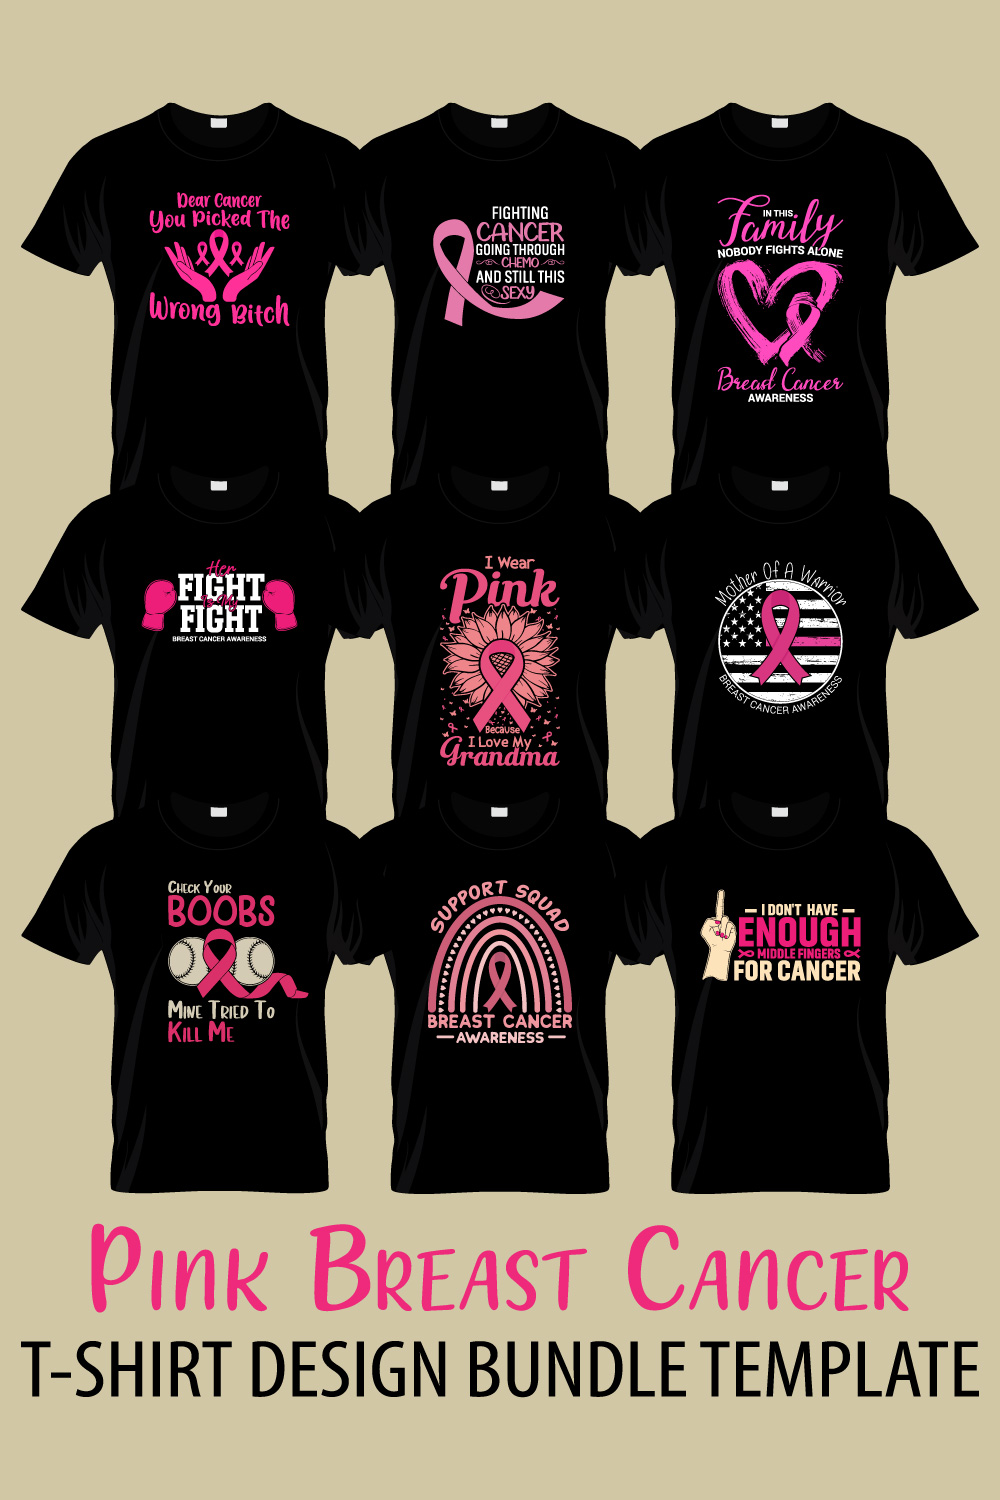 Pink Breast Cancer T-shirt Designs Bundle pinterest preview image.